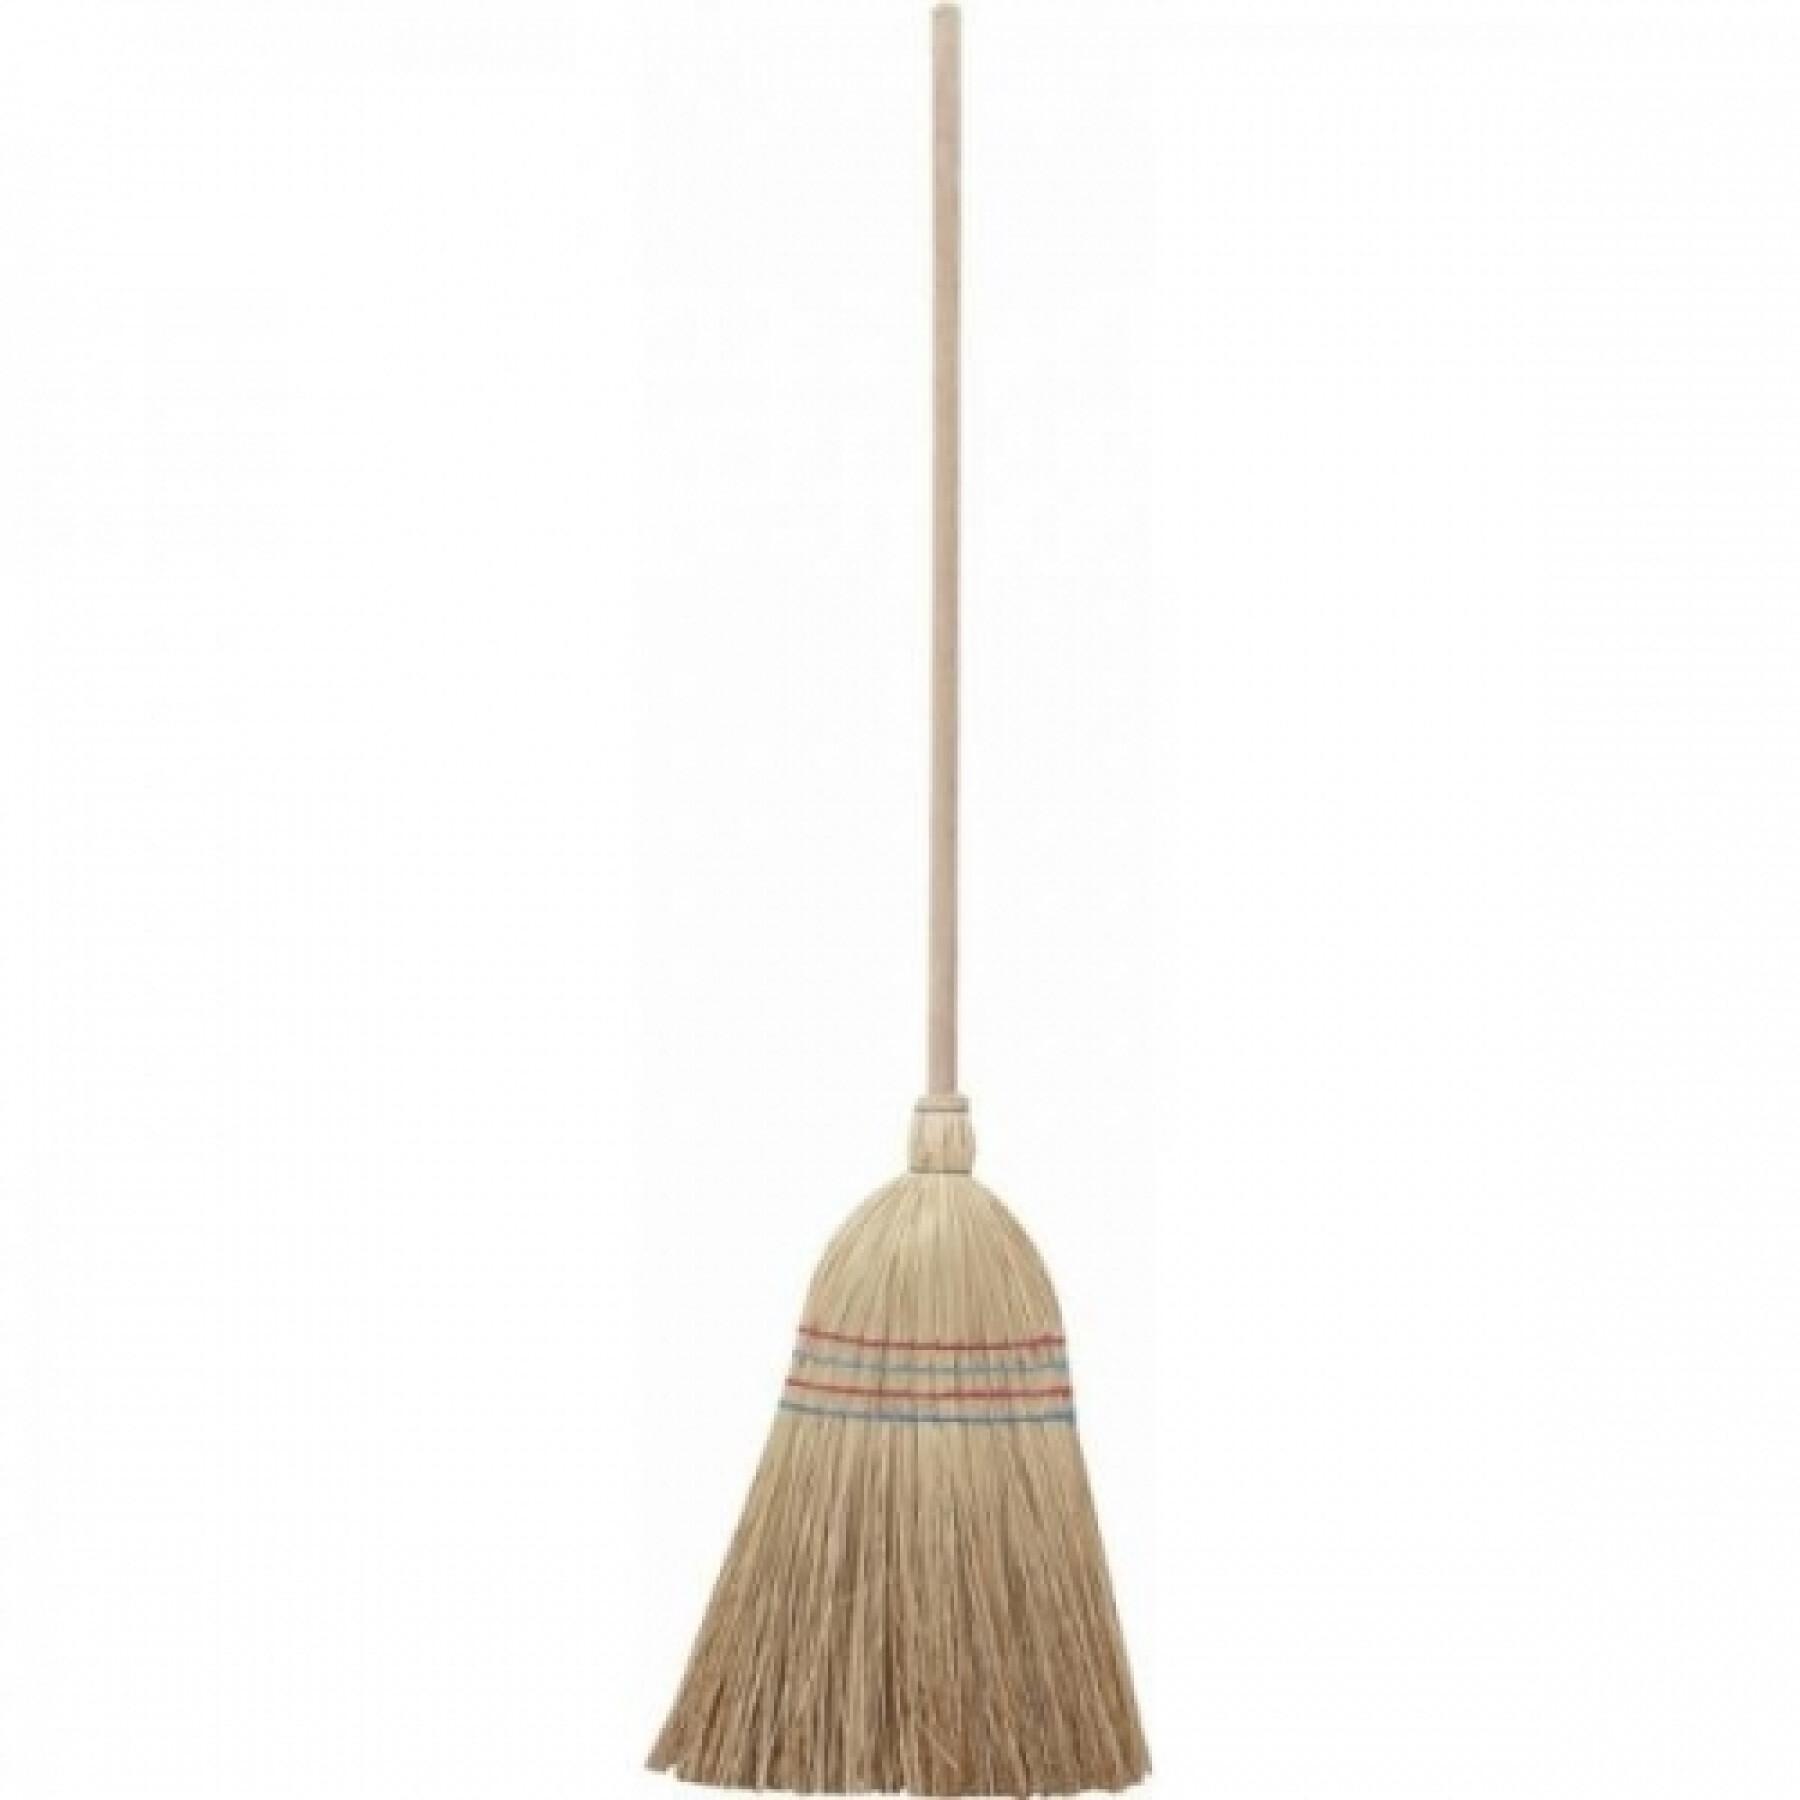 Stable broom made of rice straw Ekkia